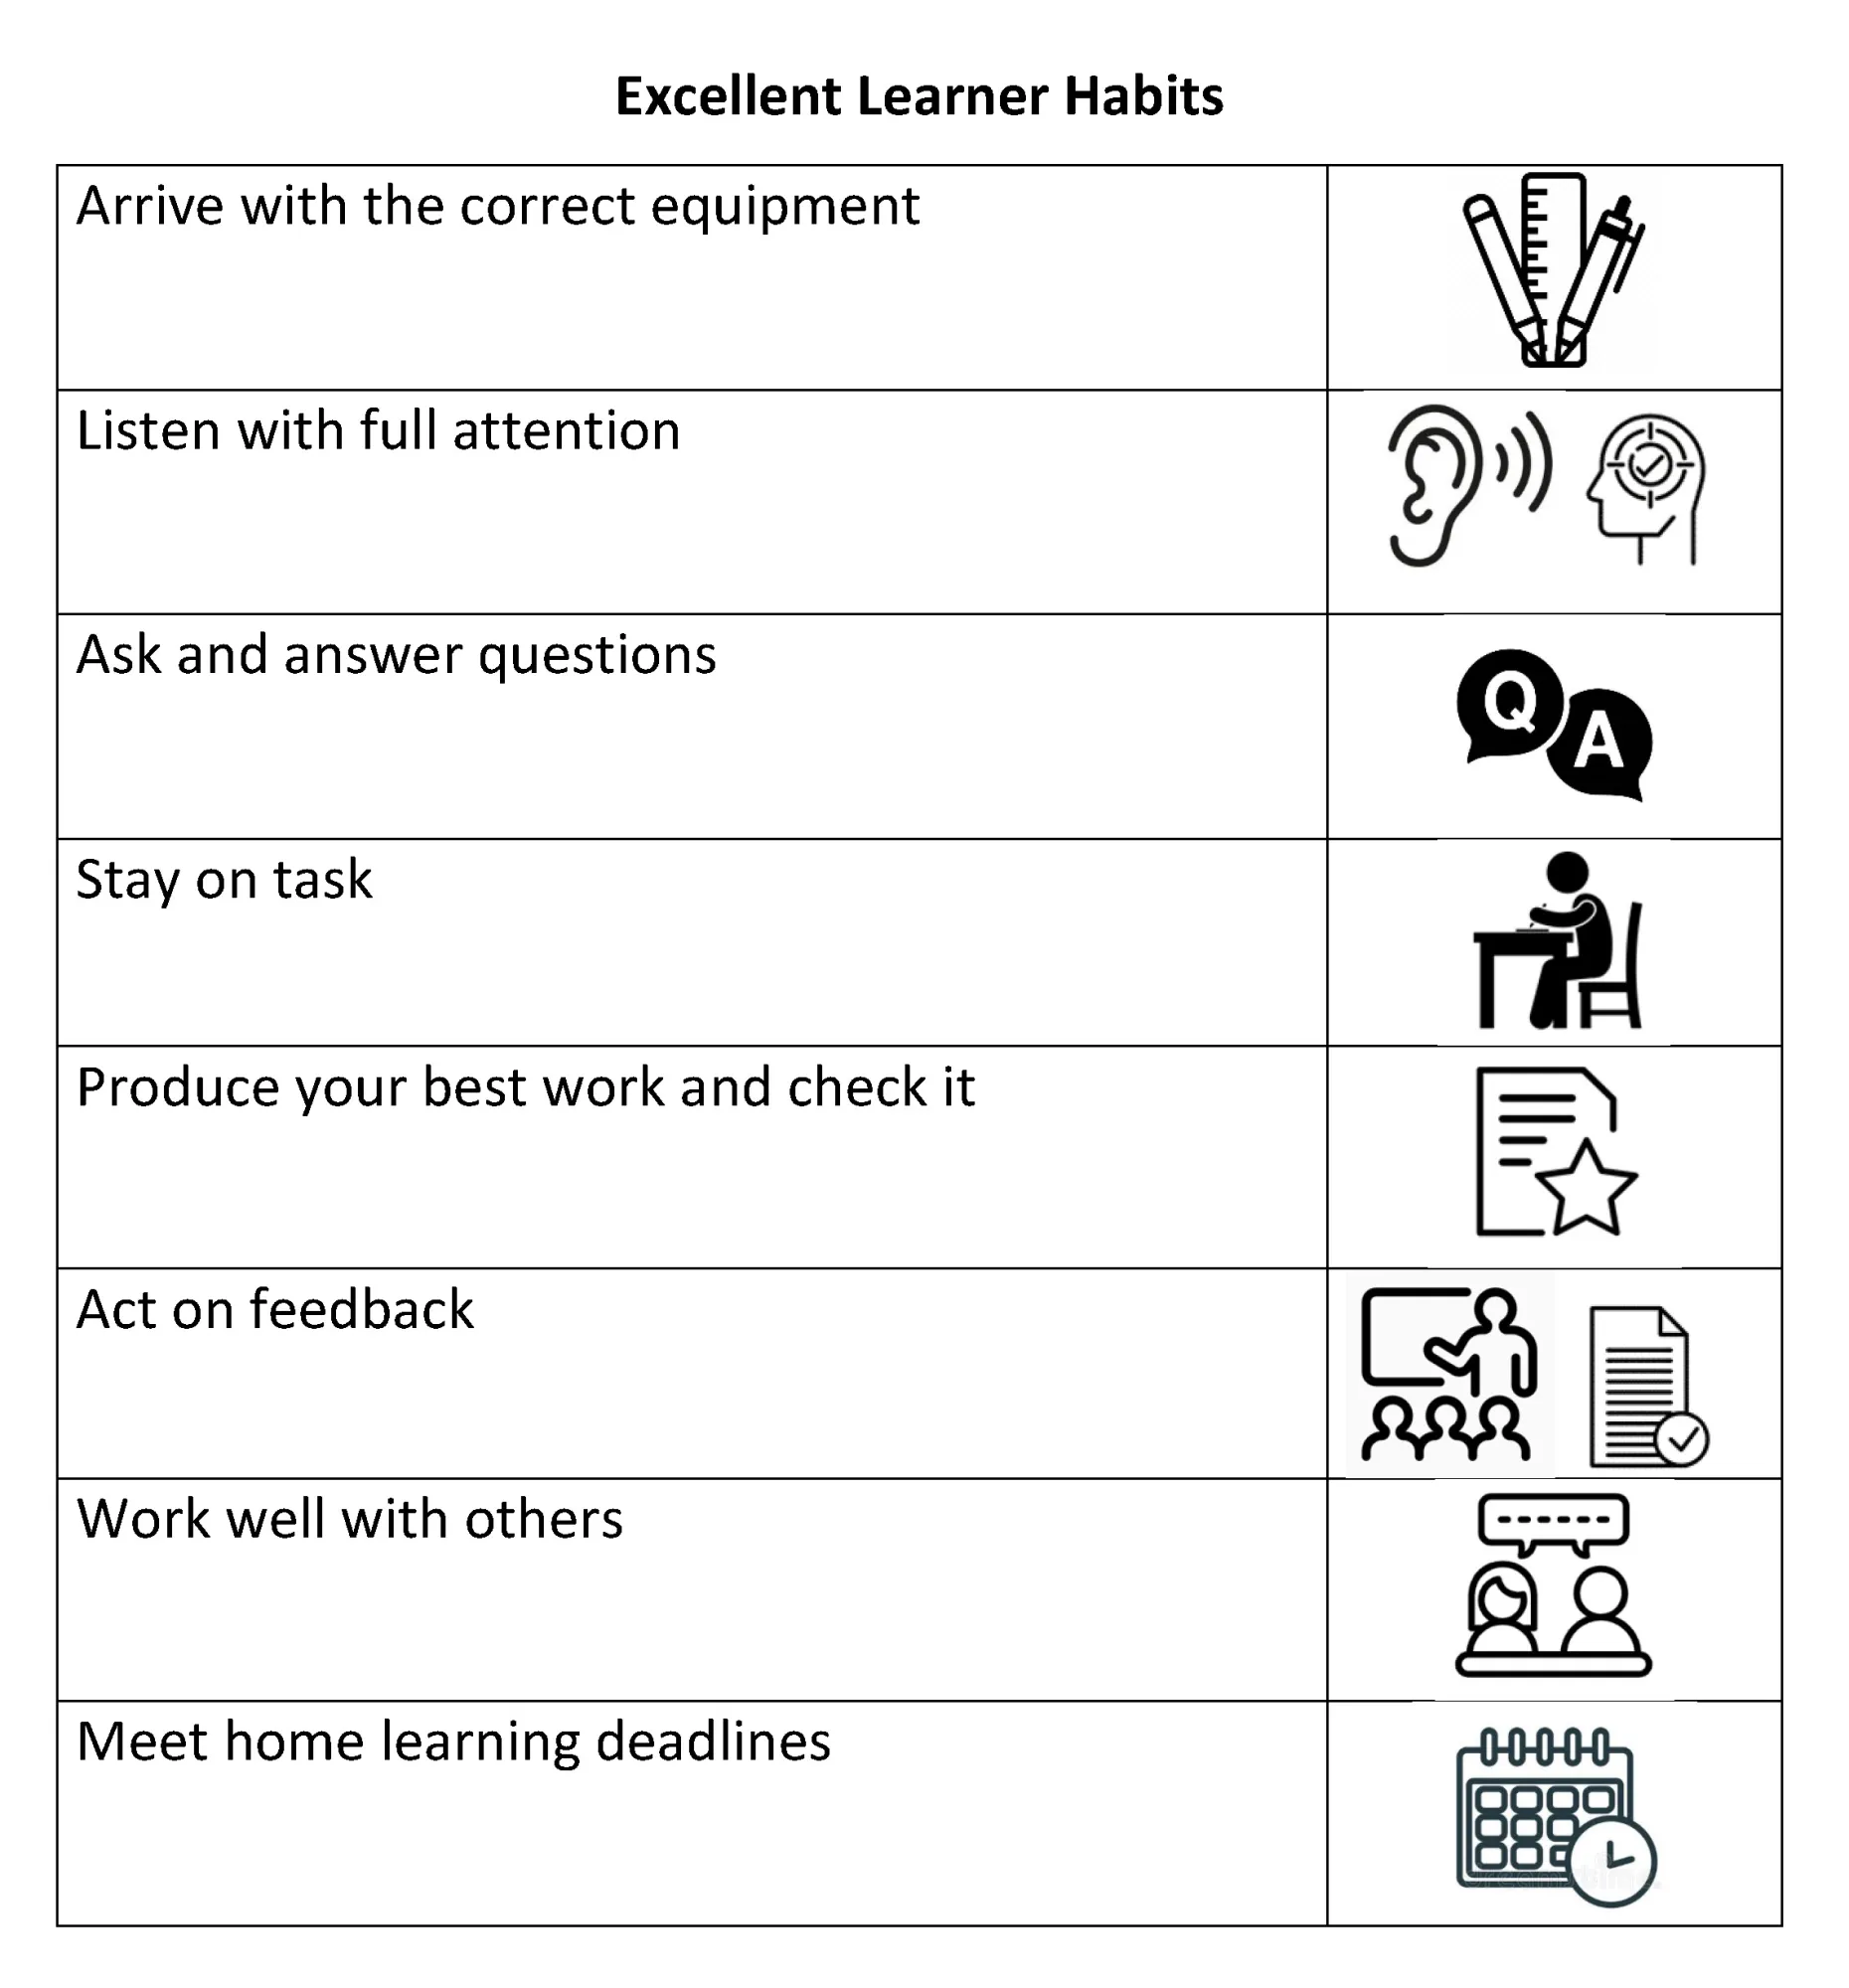 Excellent-Learner-Habits